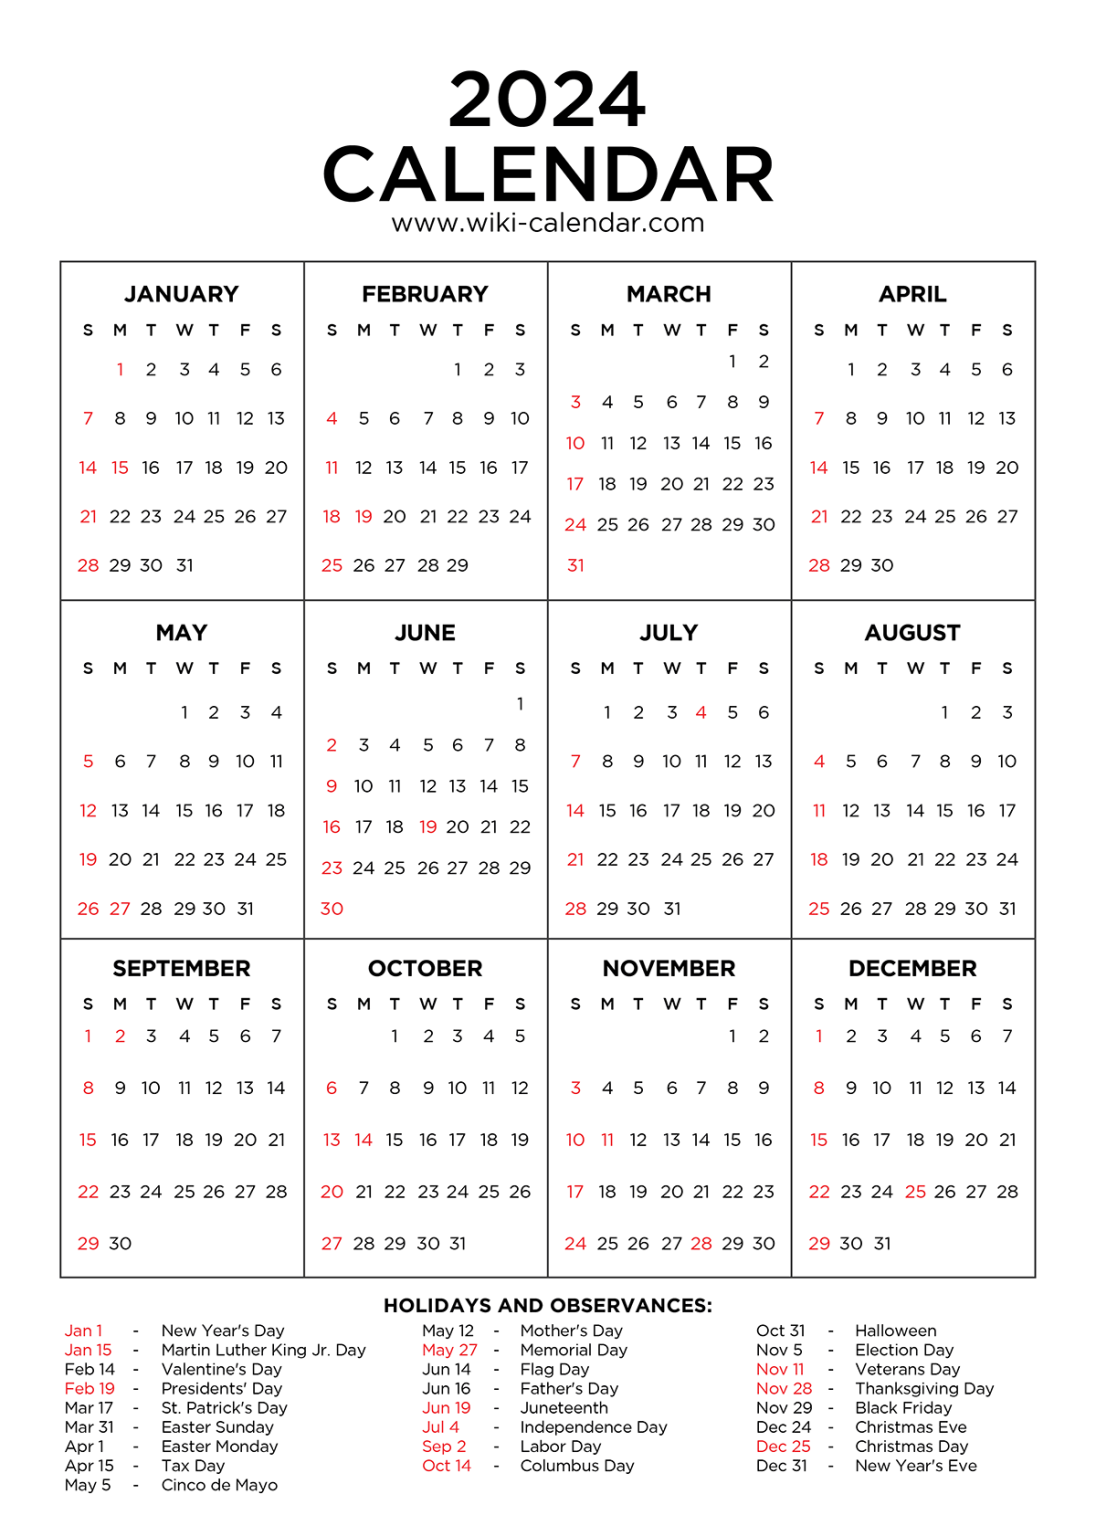 Year 2024 Calendar Printable With Holidays Wiki Calendar - Free Printable 2024 Photo Calendar With Holidays